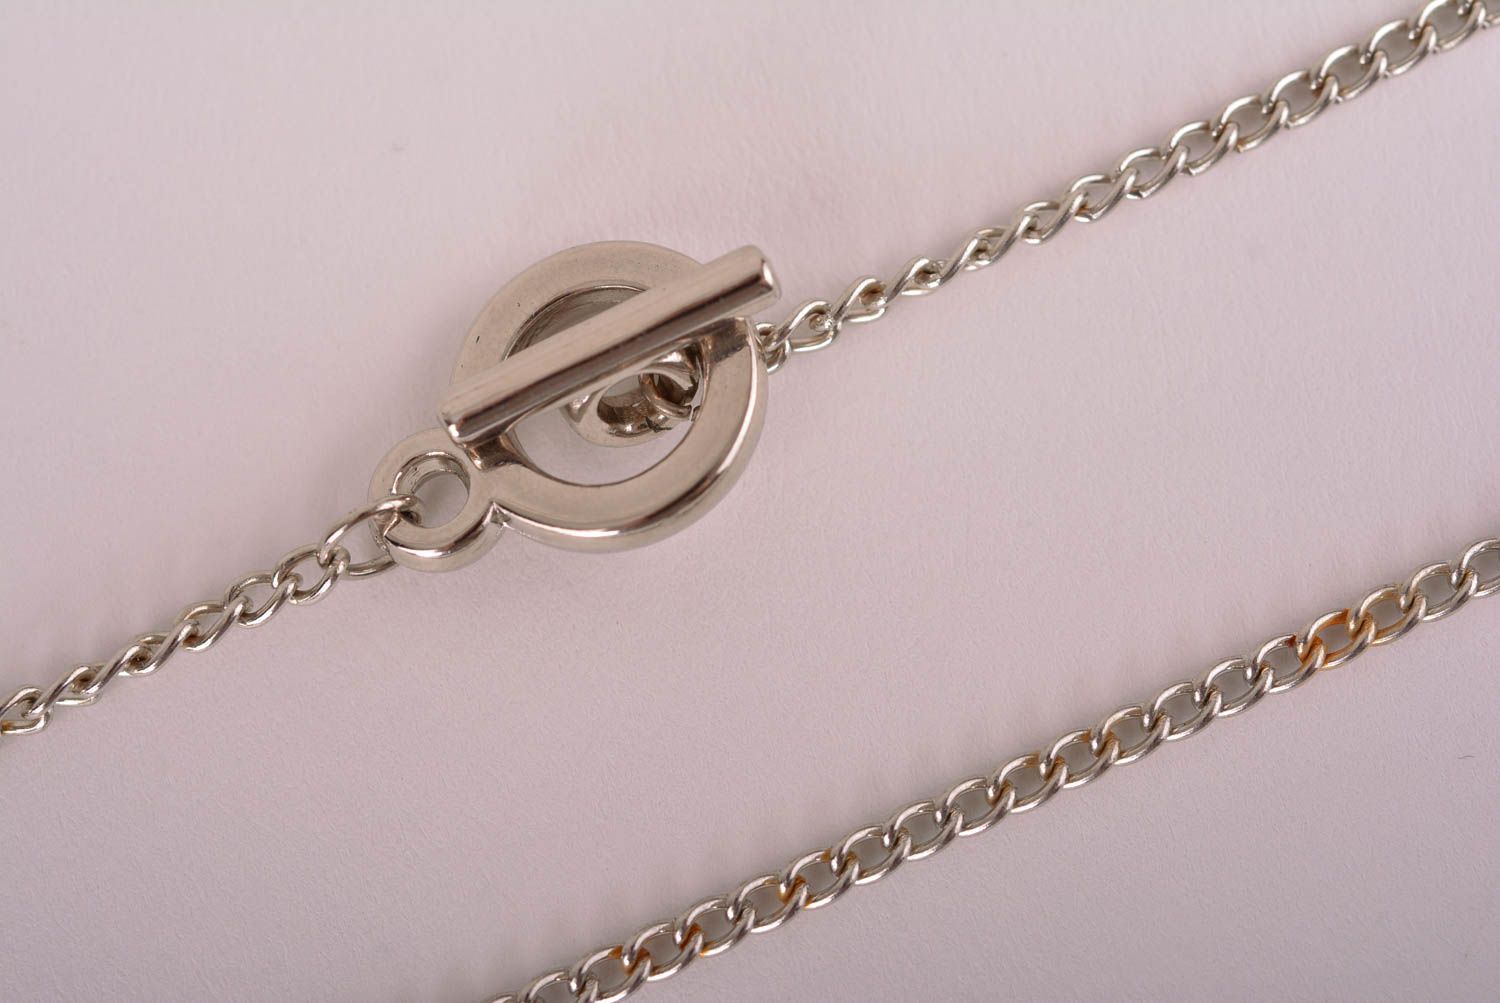 Handmade pendant epoxy resin jewelry gift ideas unusual pendant gift for her photo 5